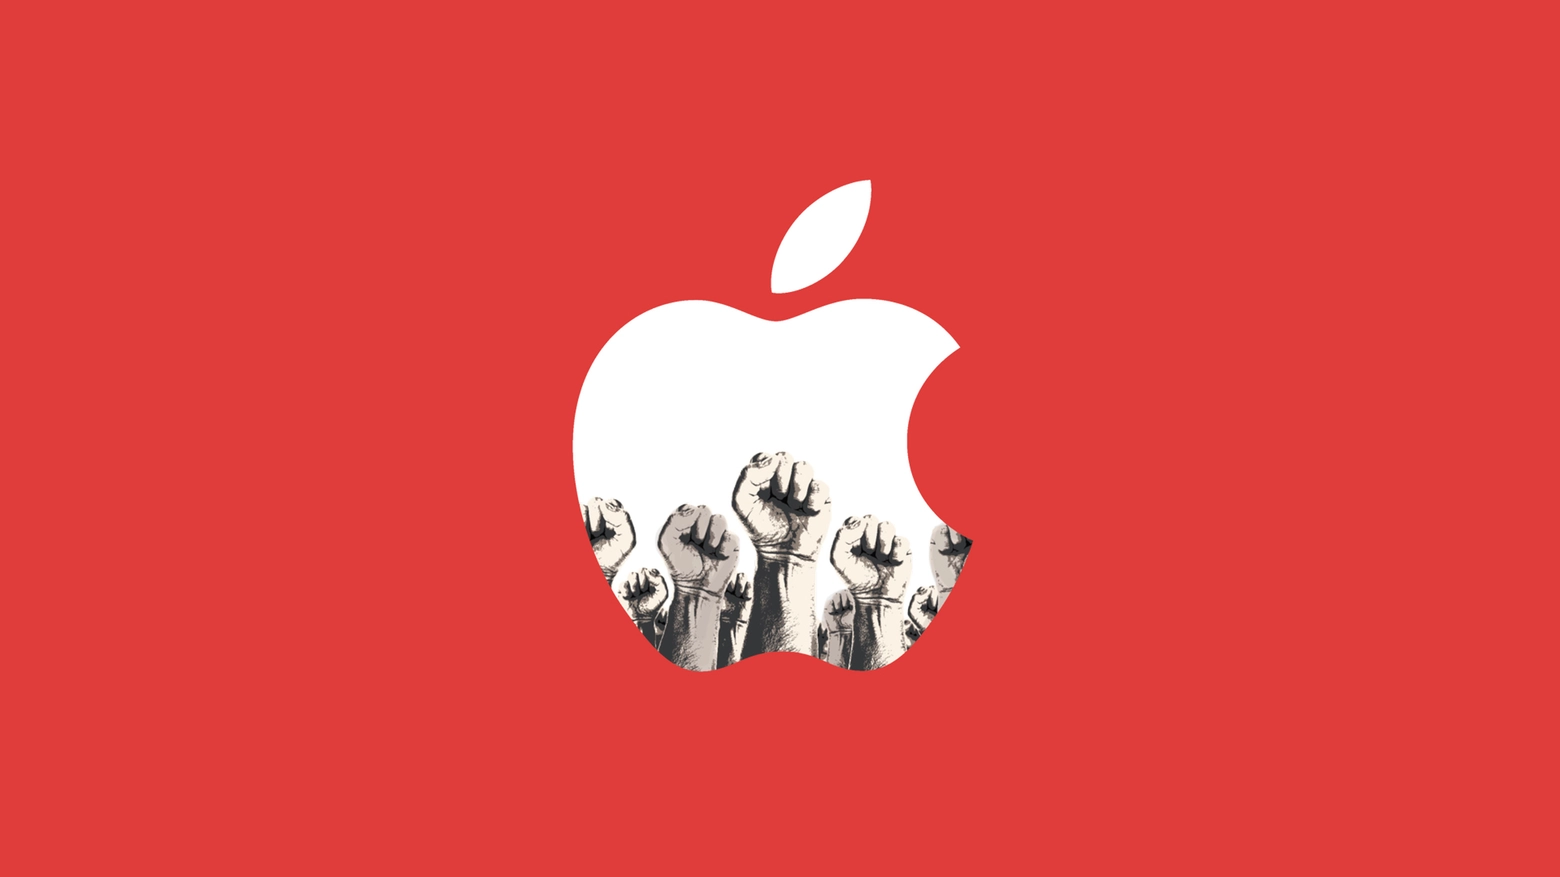 Apple fu fondata nel 1976 da Steve Jobs, Steve Wozniak e Ronald Wayne